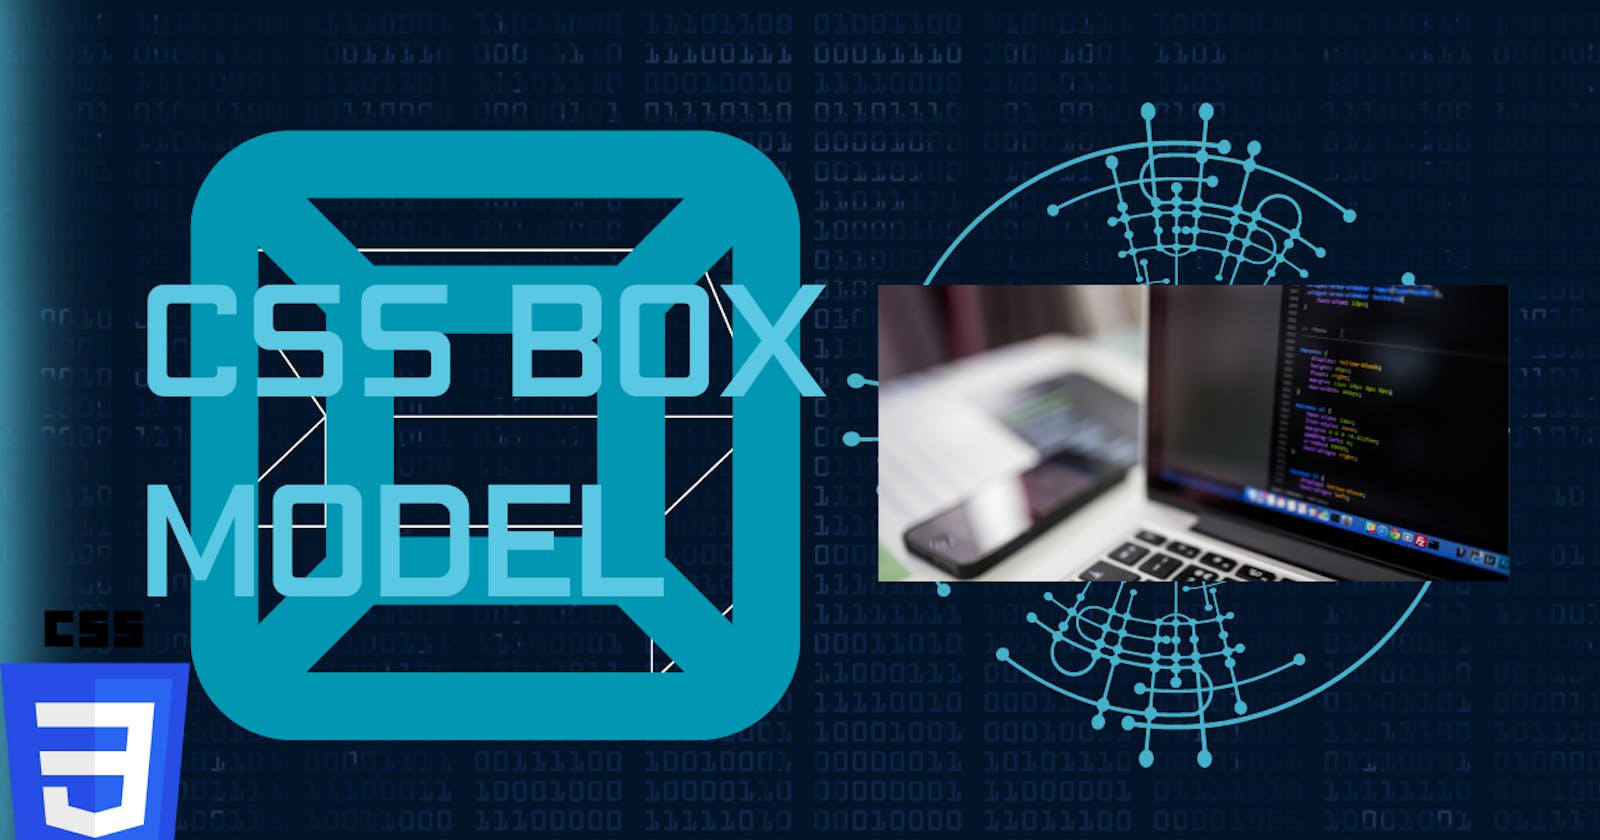 The CSS Box Model